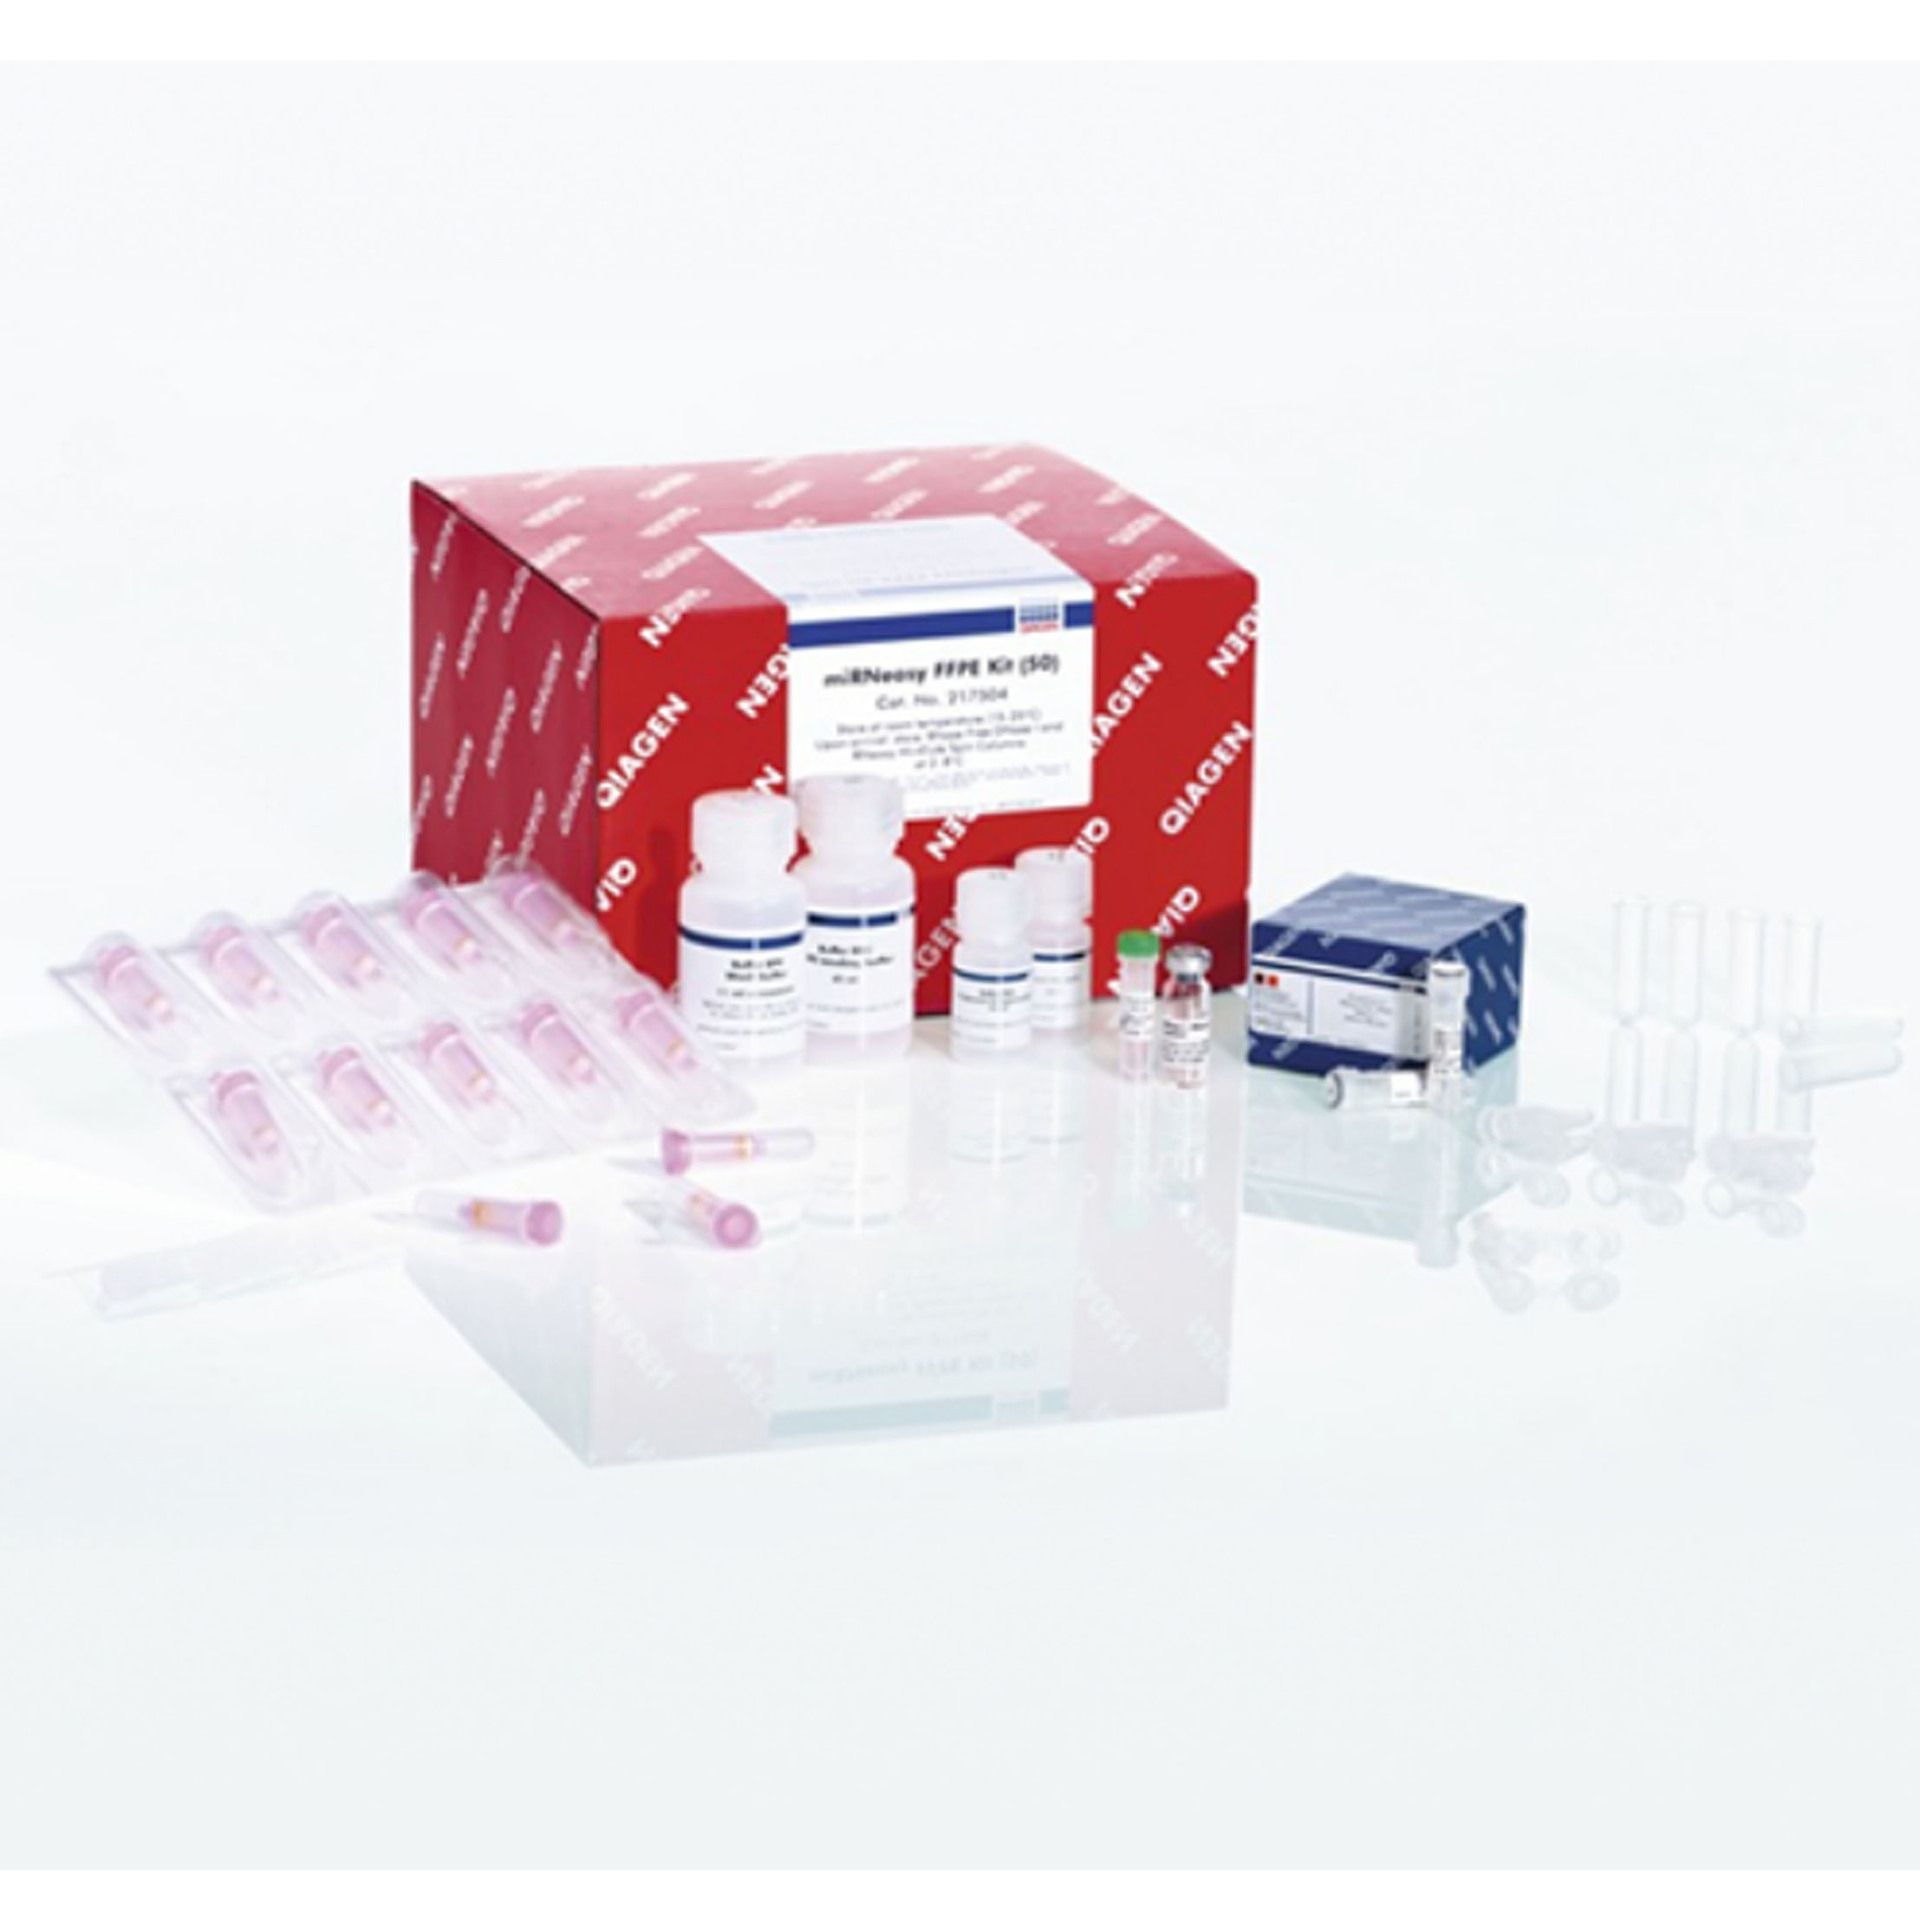 Qiagen 217504 石蜡包埋组织miRNA和总RNA纯化试剂盒